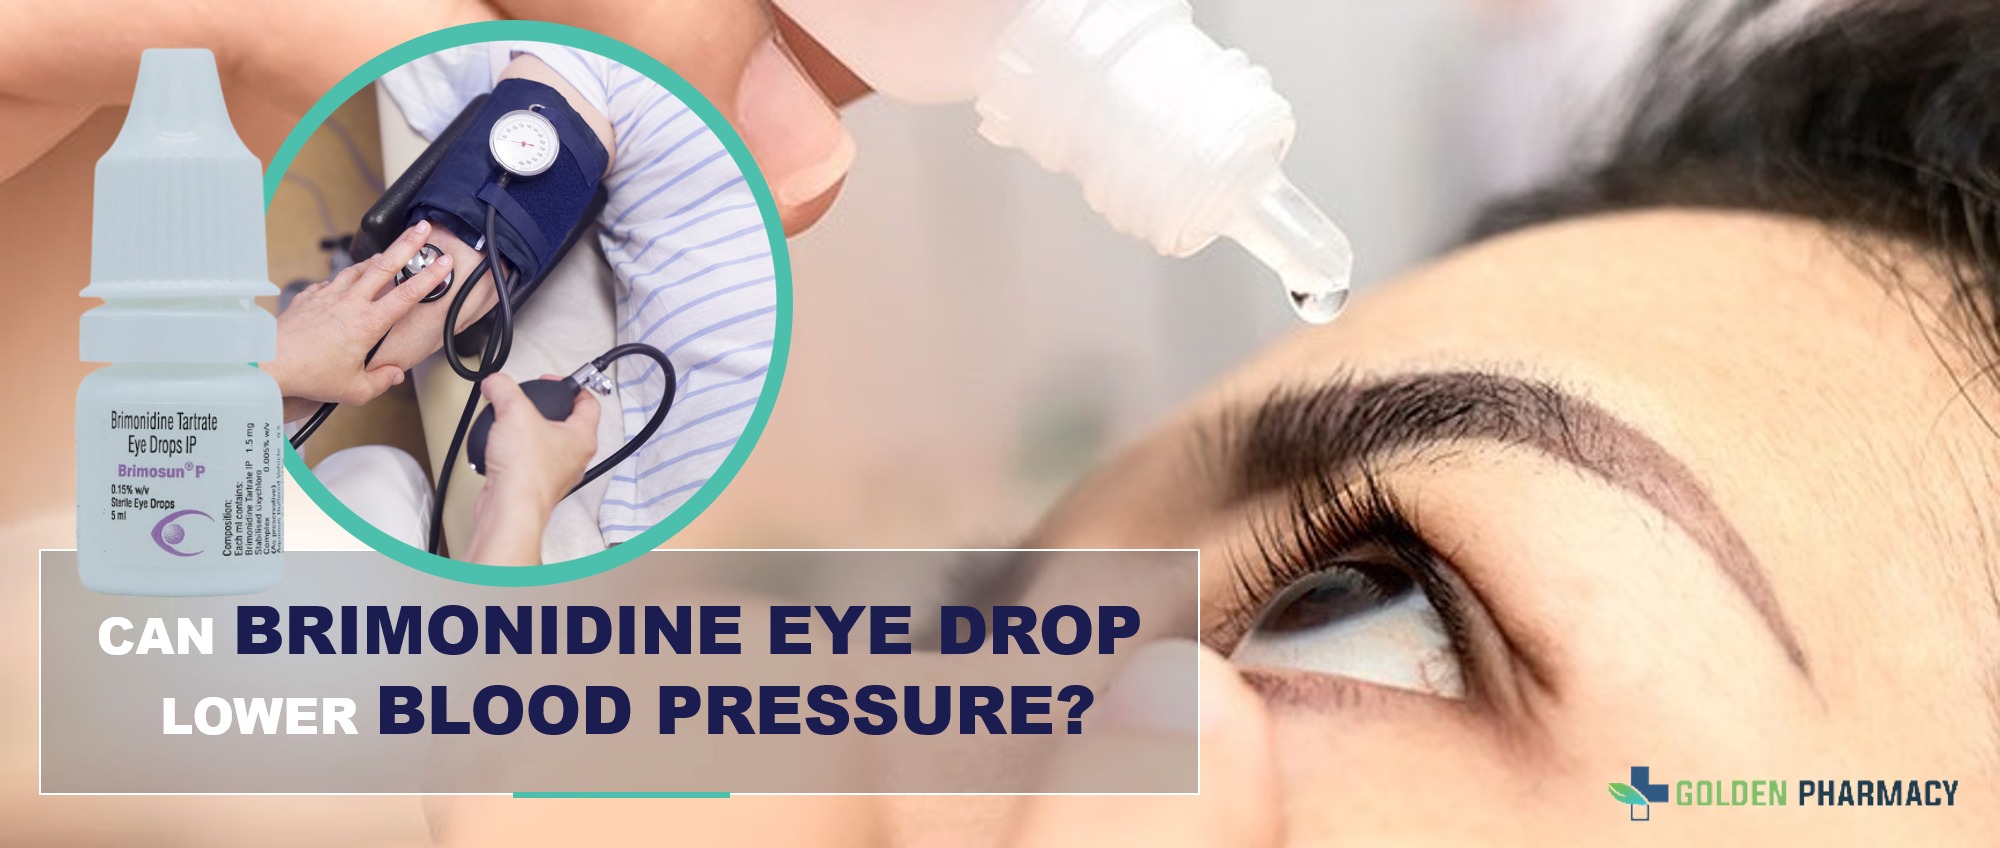 Can Brimonidine eye drop lower blood pressure?